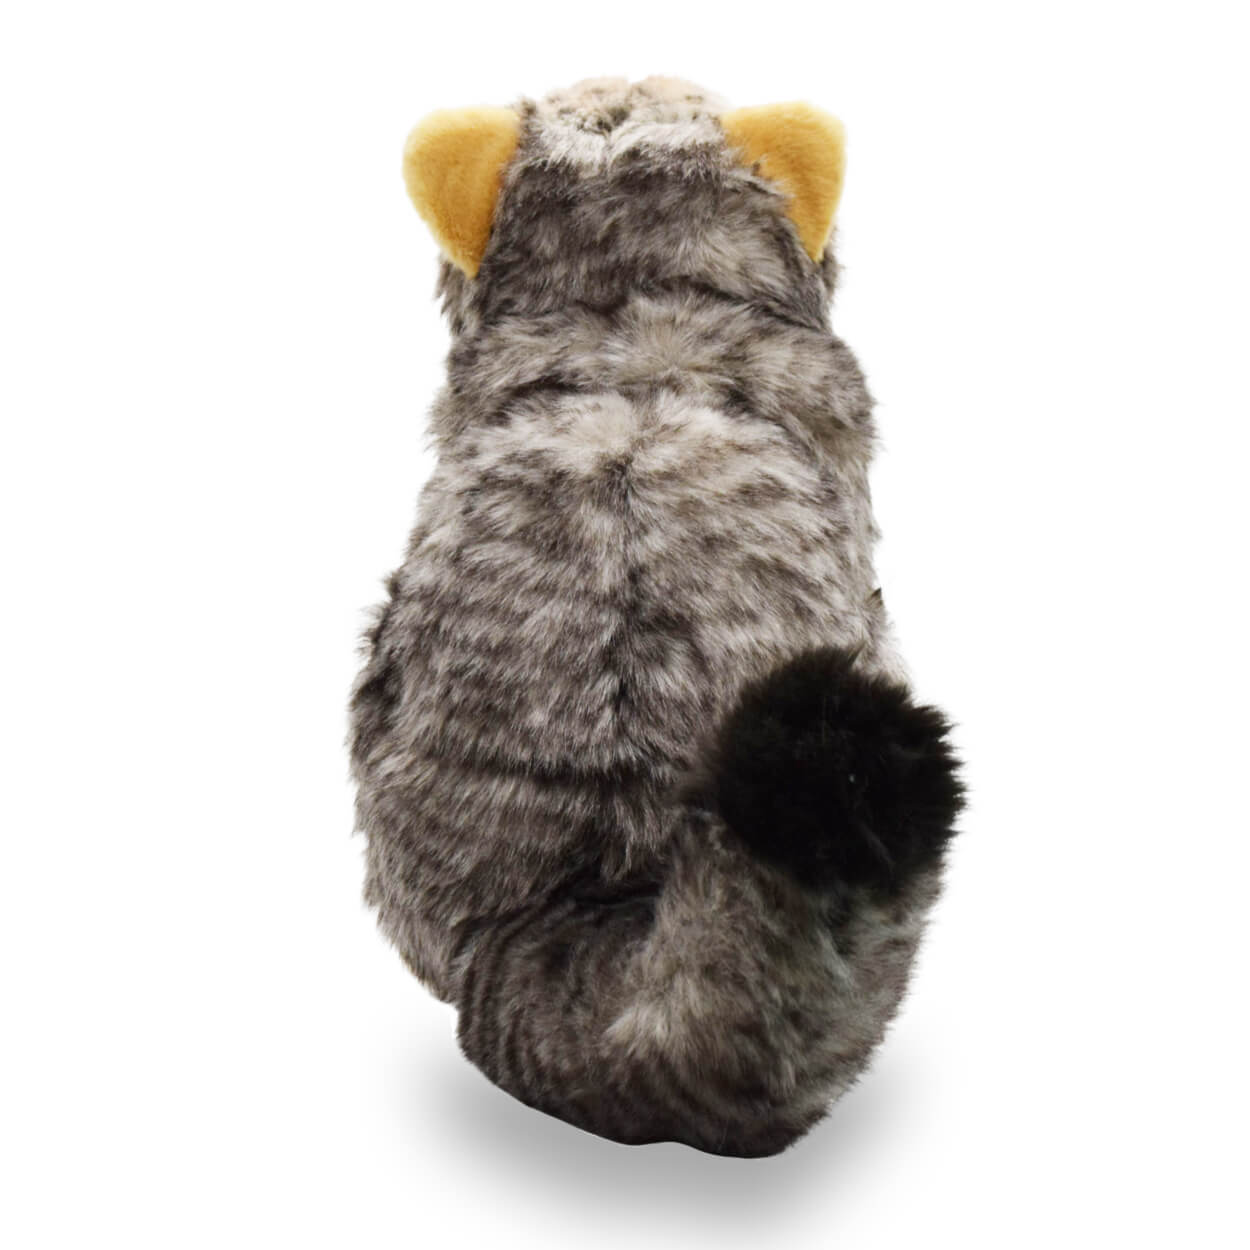 Realistic Sitting Pallas's cat Stuffed Animal Plush Toy, Manul Plushies